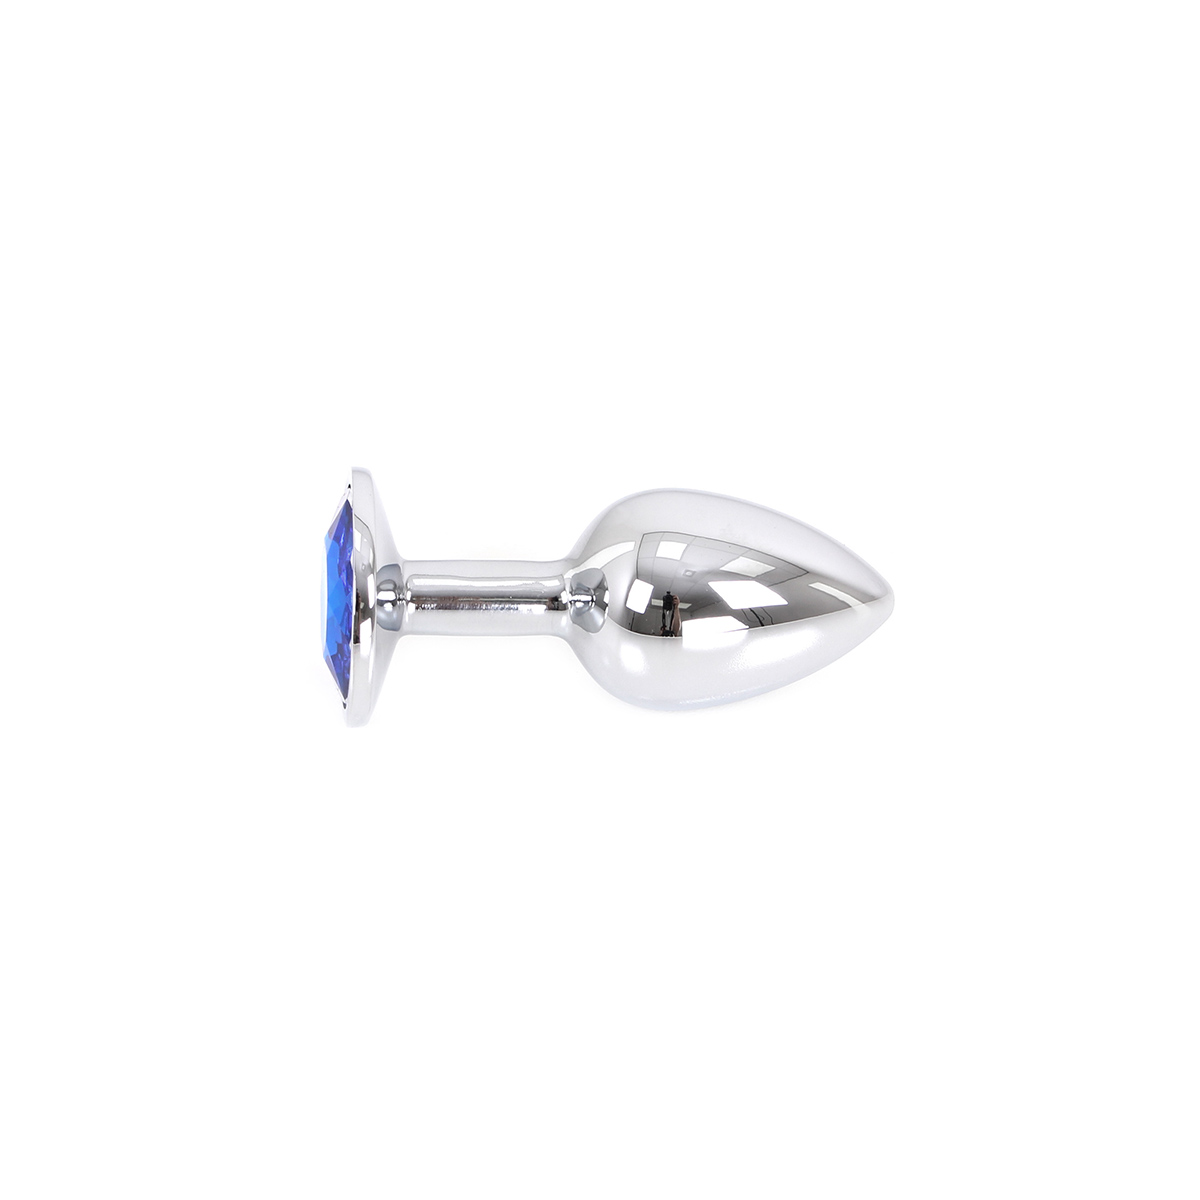 Buttplug-Aluminium-Blue-Small-OPR-3010088-2